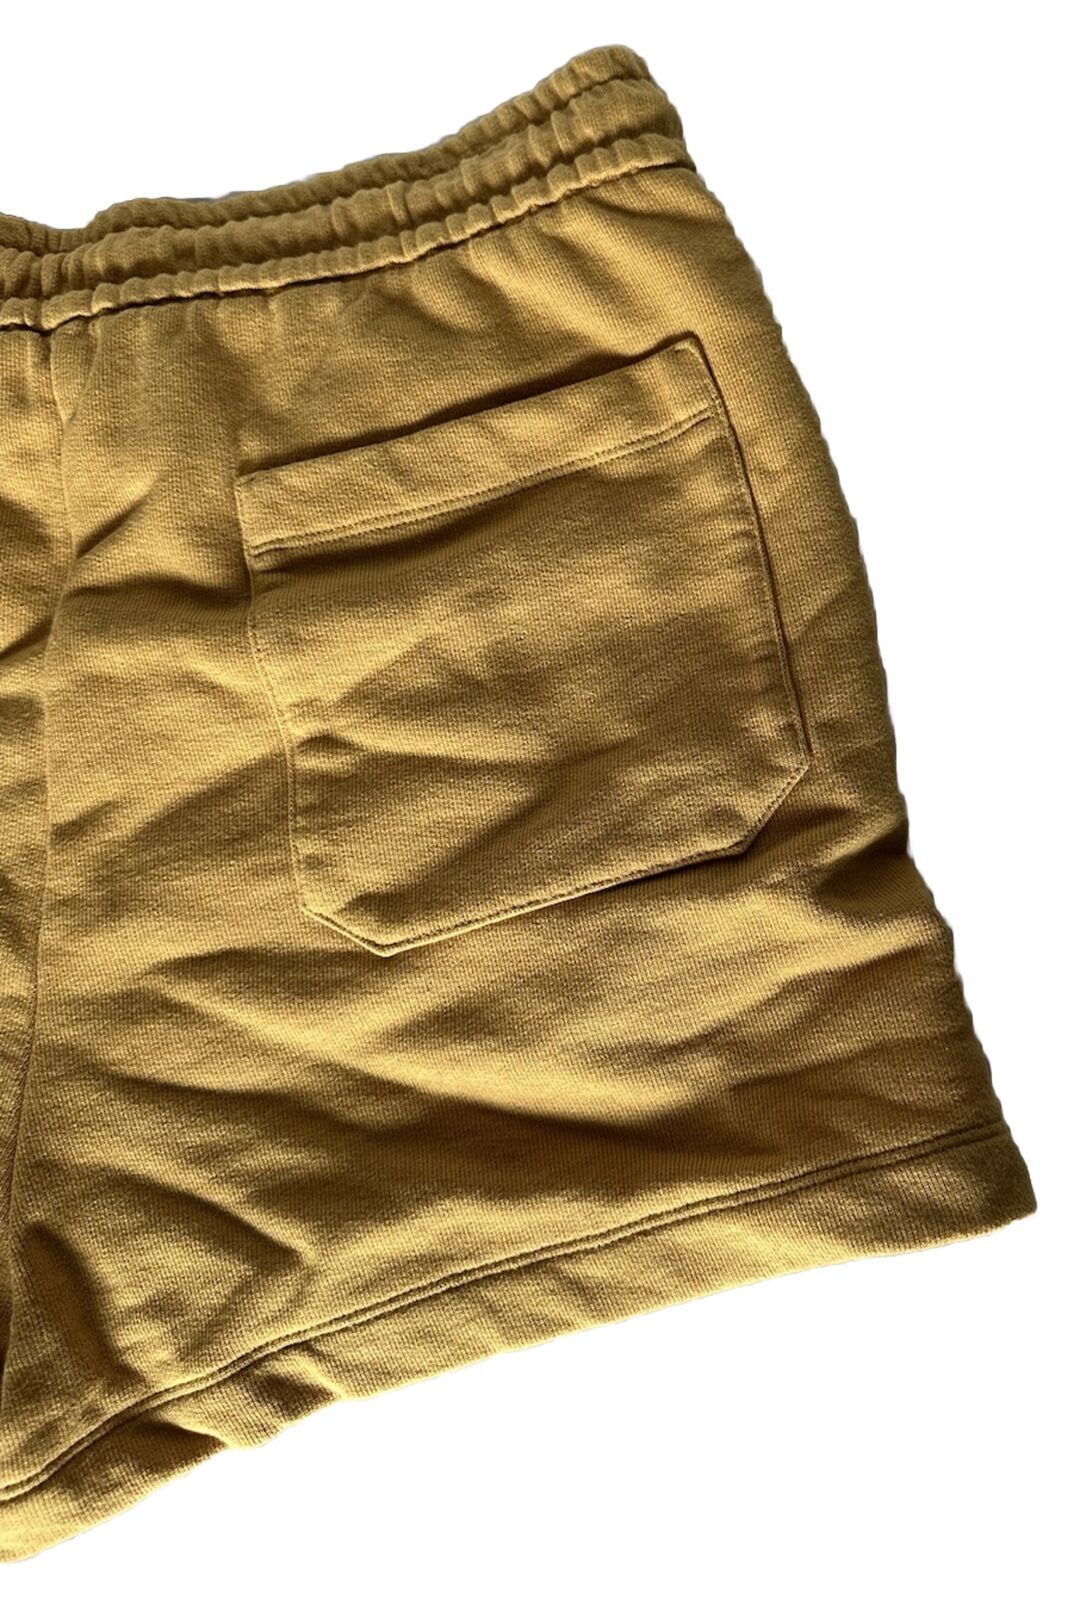 NWT $620 The North Face x Gucci Web Print Men's Shorts Mustard XL Italy 651726